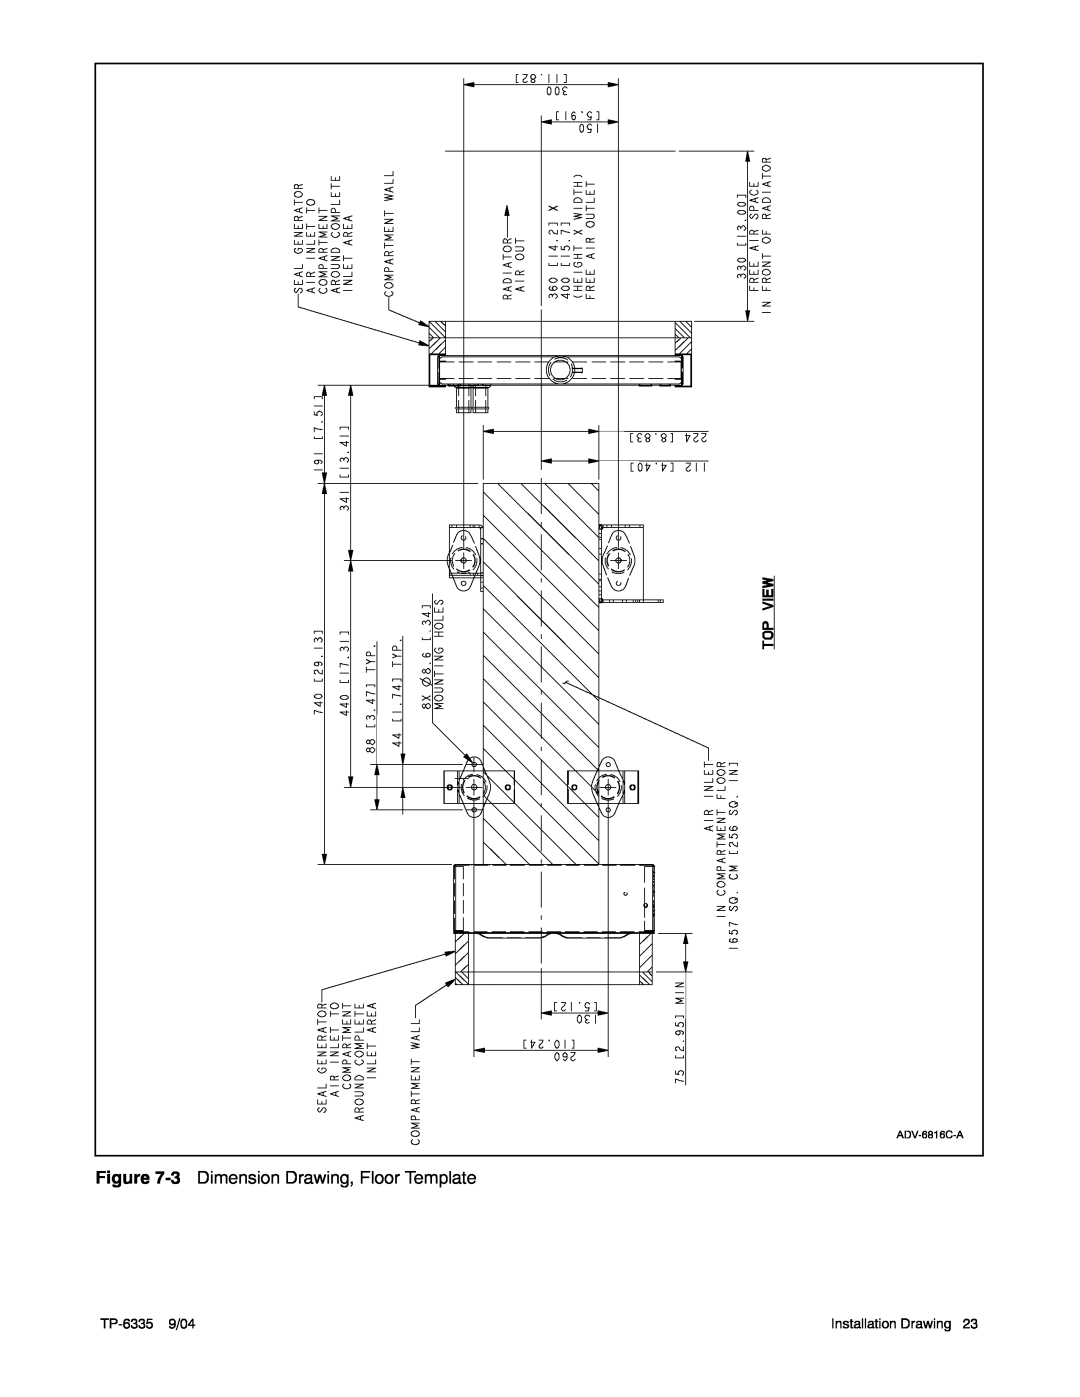 Kohler 15ERG, 13ERG, 10ERG manual 3 Dimension Drawing, Floor Template, ADV-6816C-A 